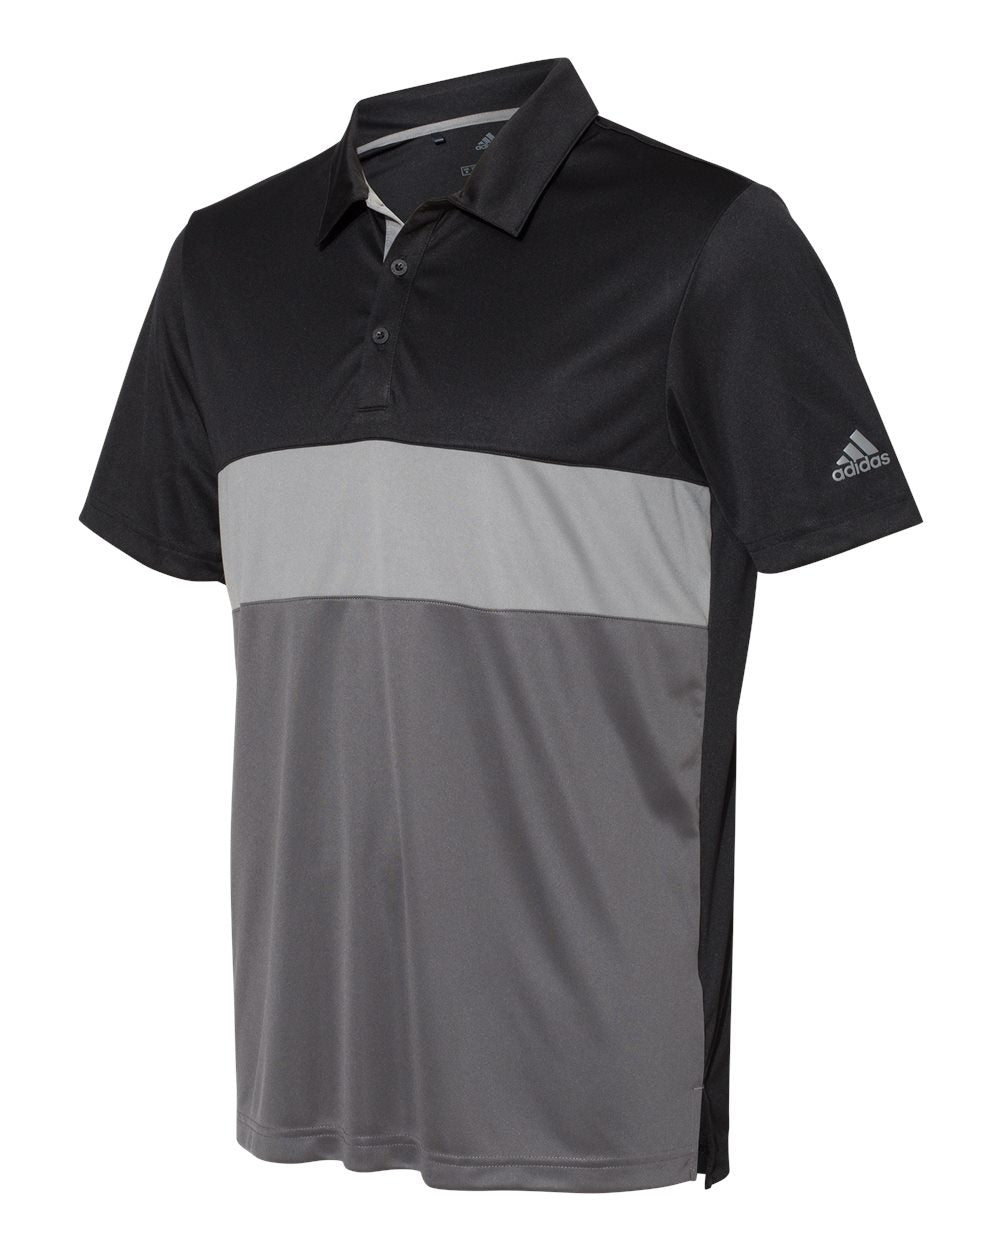 Adidas A236 Merch Block Sport Shirt - Black Grey Three Grey Five